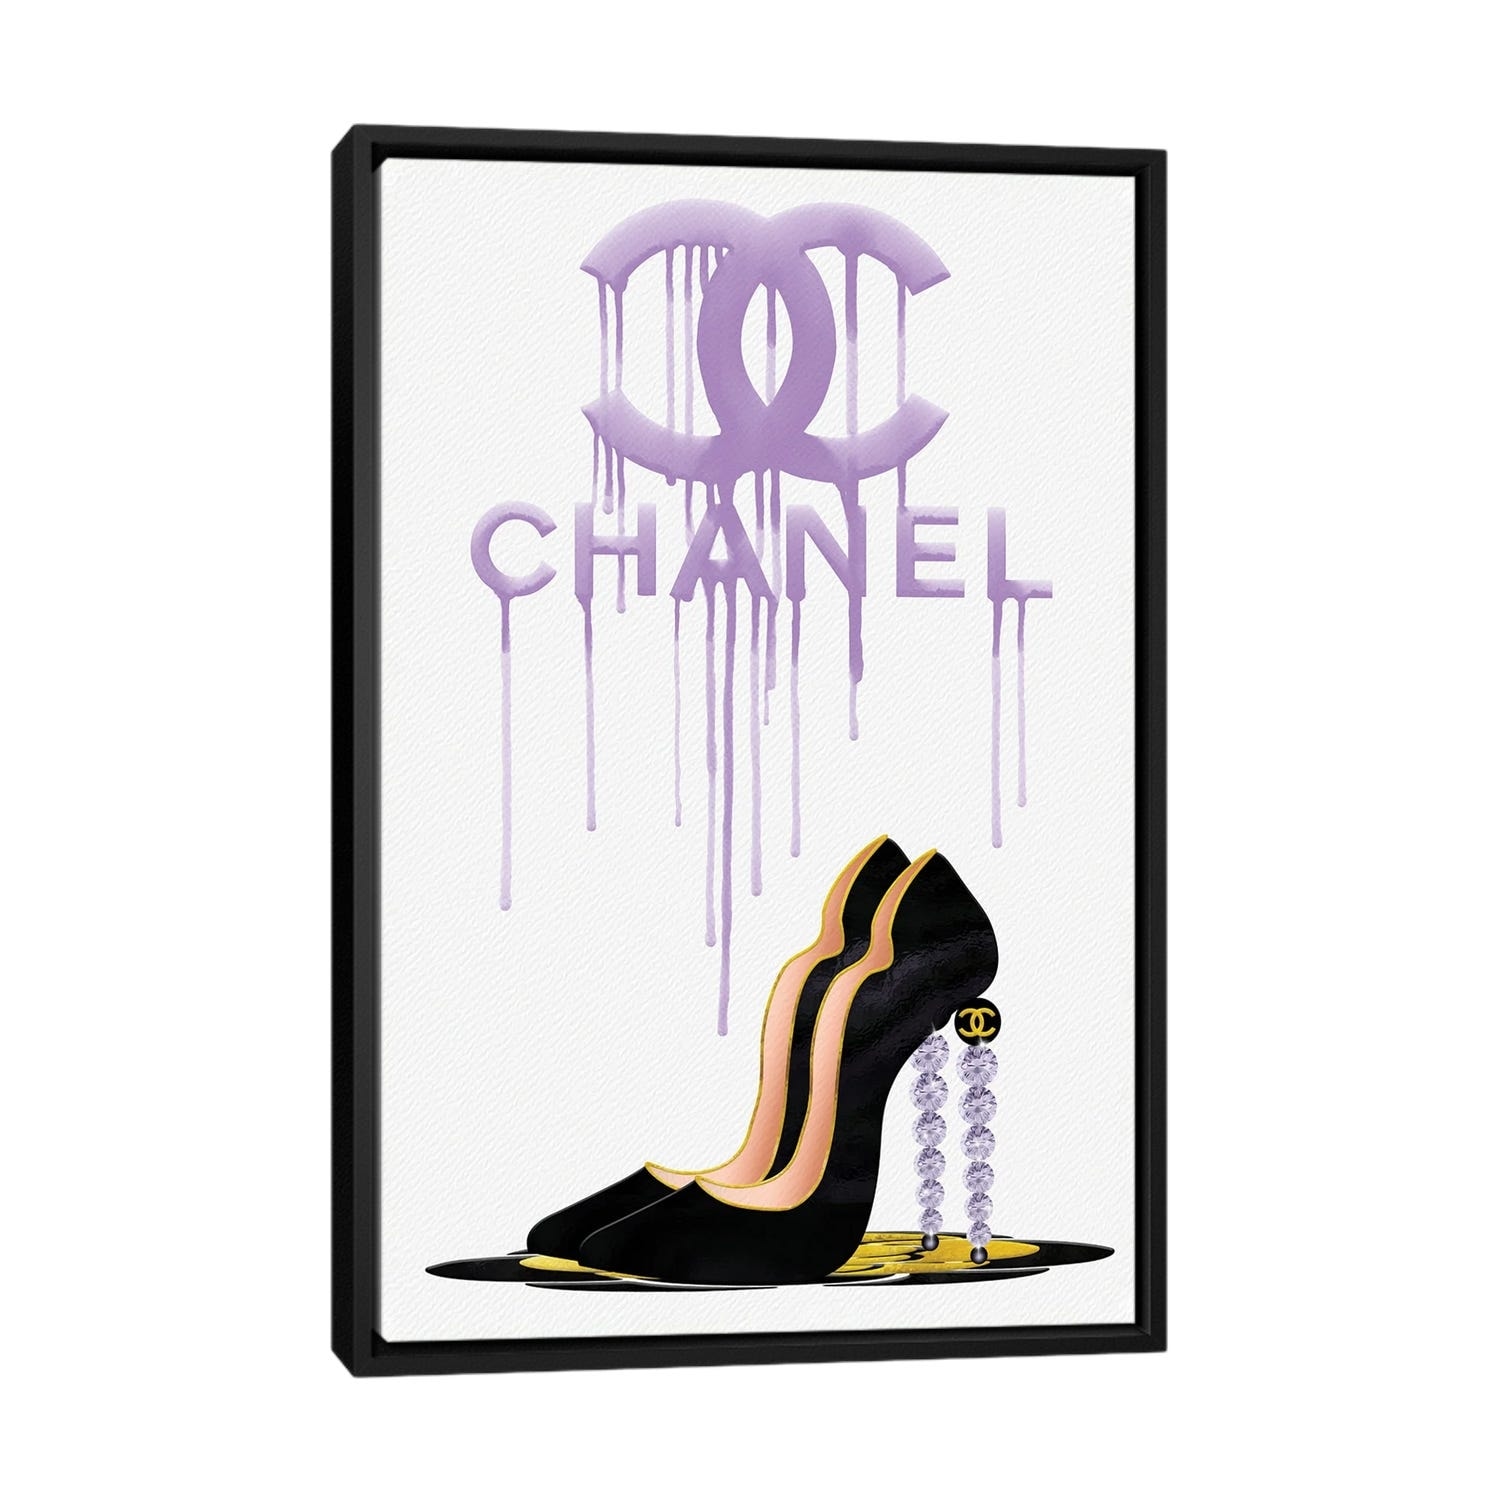 Fashion Drips CC Purple High Heels, Diamonds & Pearls by Pomaikai Barron Fine Art Paper Poster ( Fashion > Fashion Brands > Chanel art) - 24x16x.25